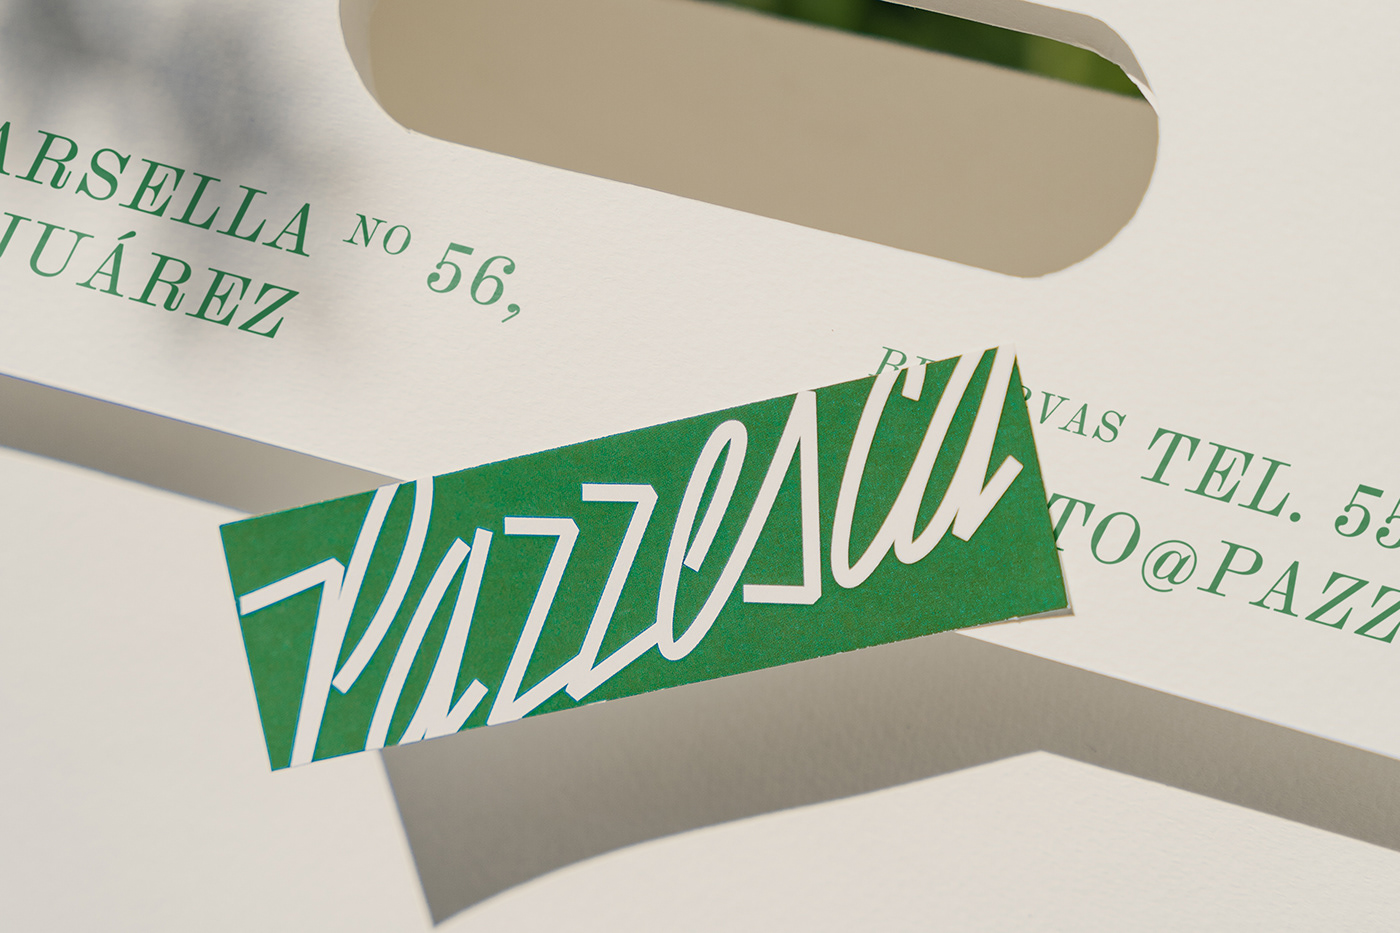 Pazzesca: A branding story through pizza!